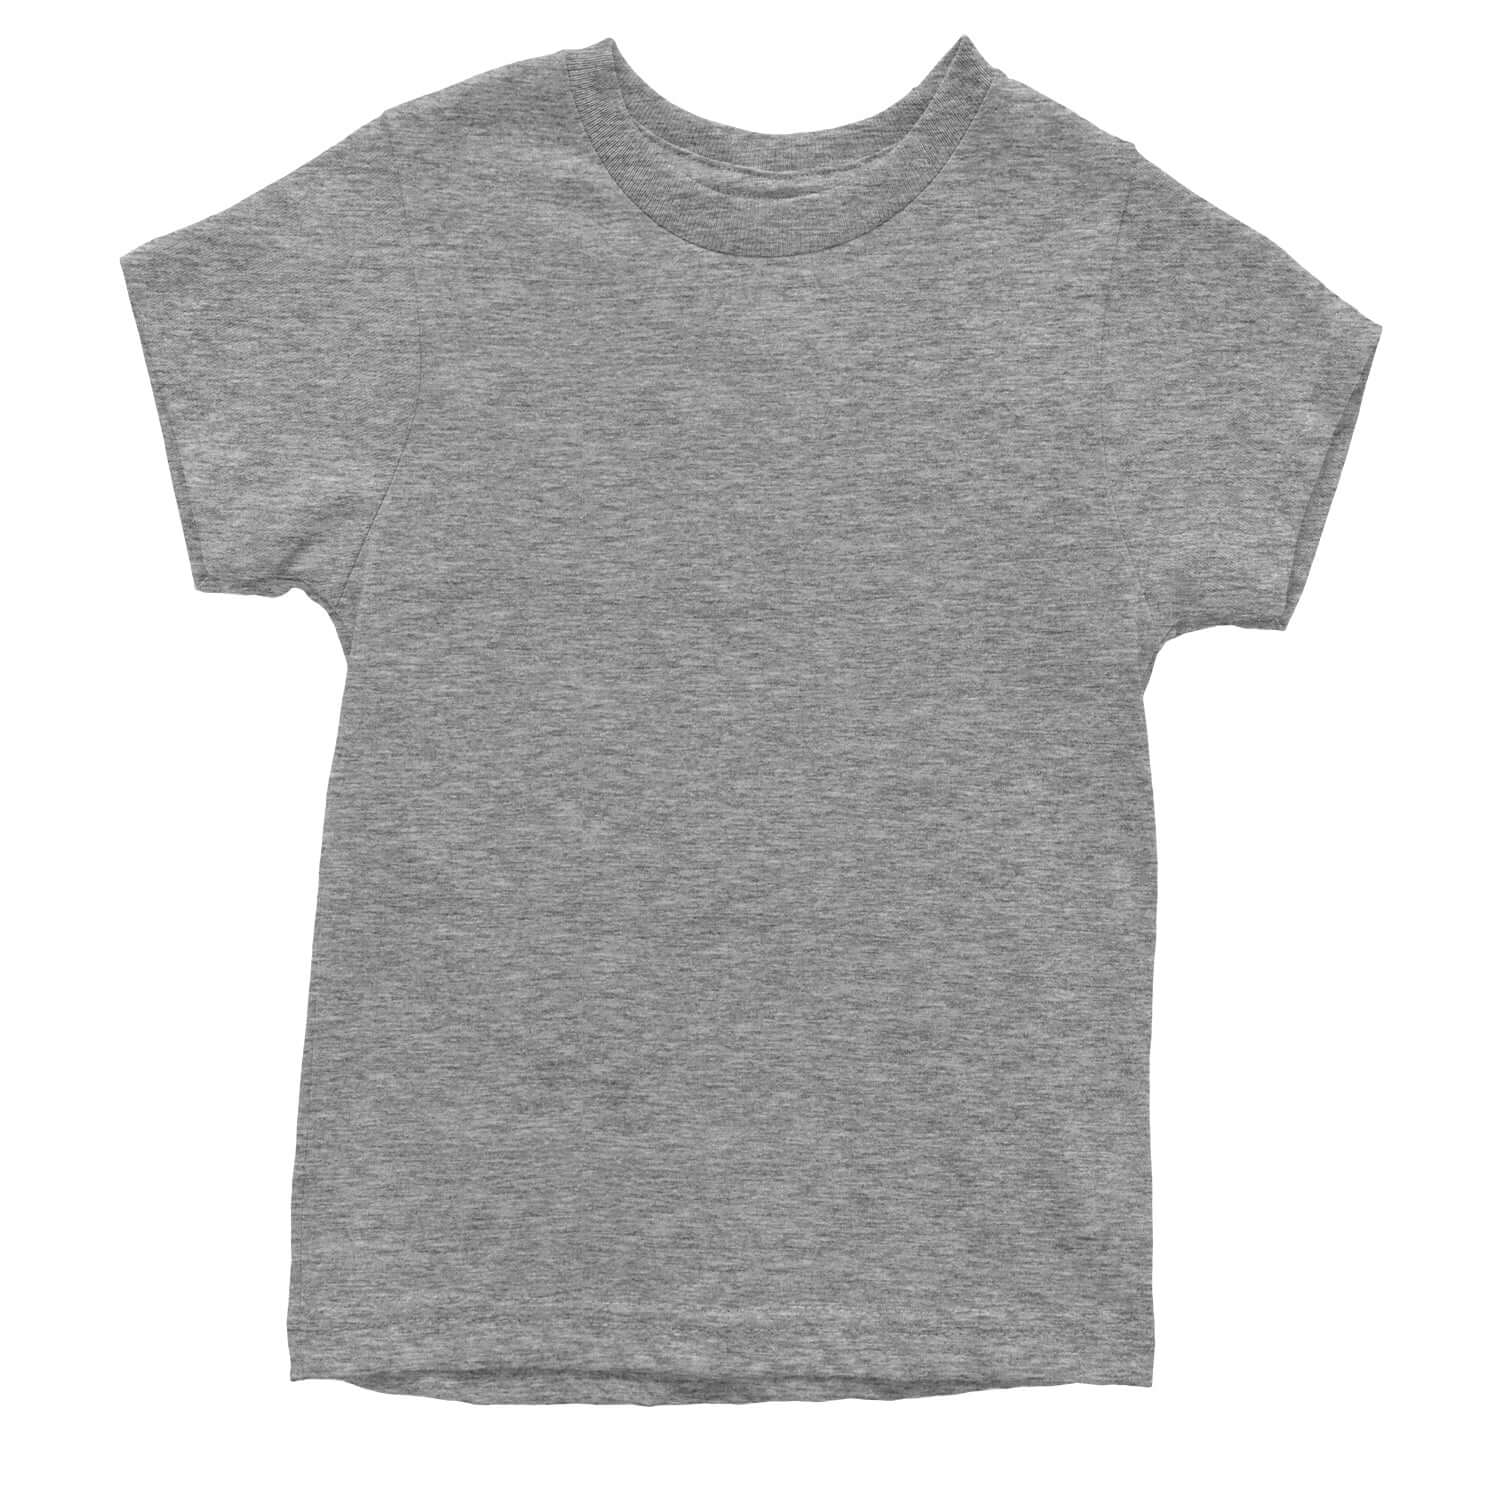 Basics - Plain Blank Youth T-shirt blank, clothing, plain, tshirts by Expression Tees